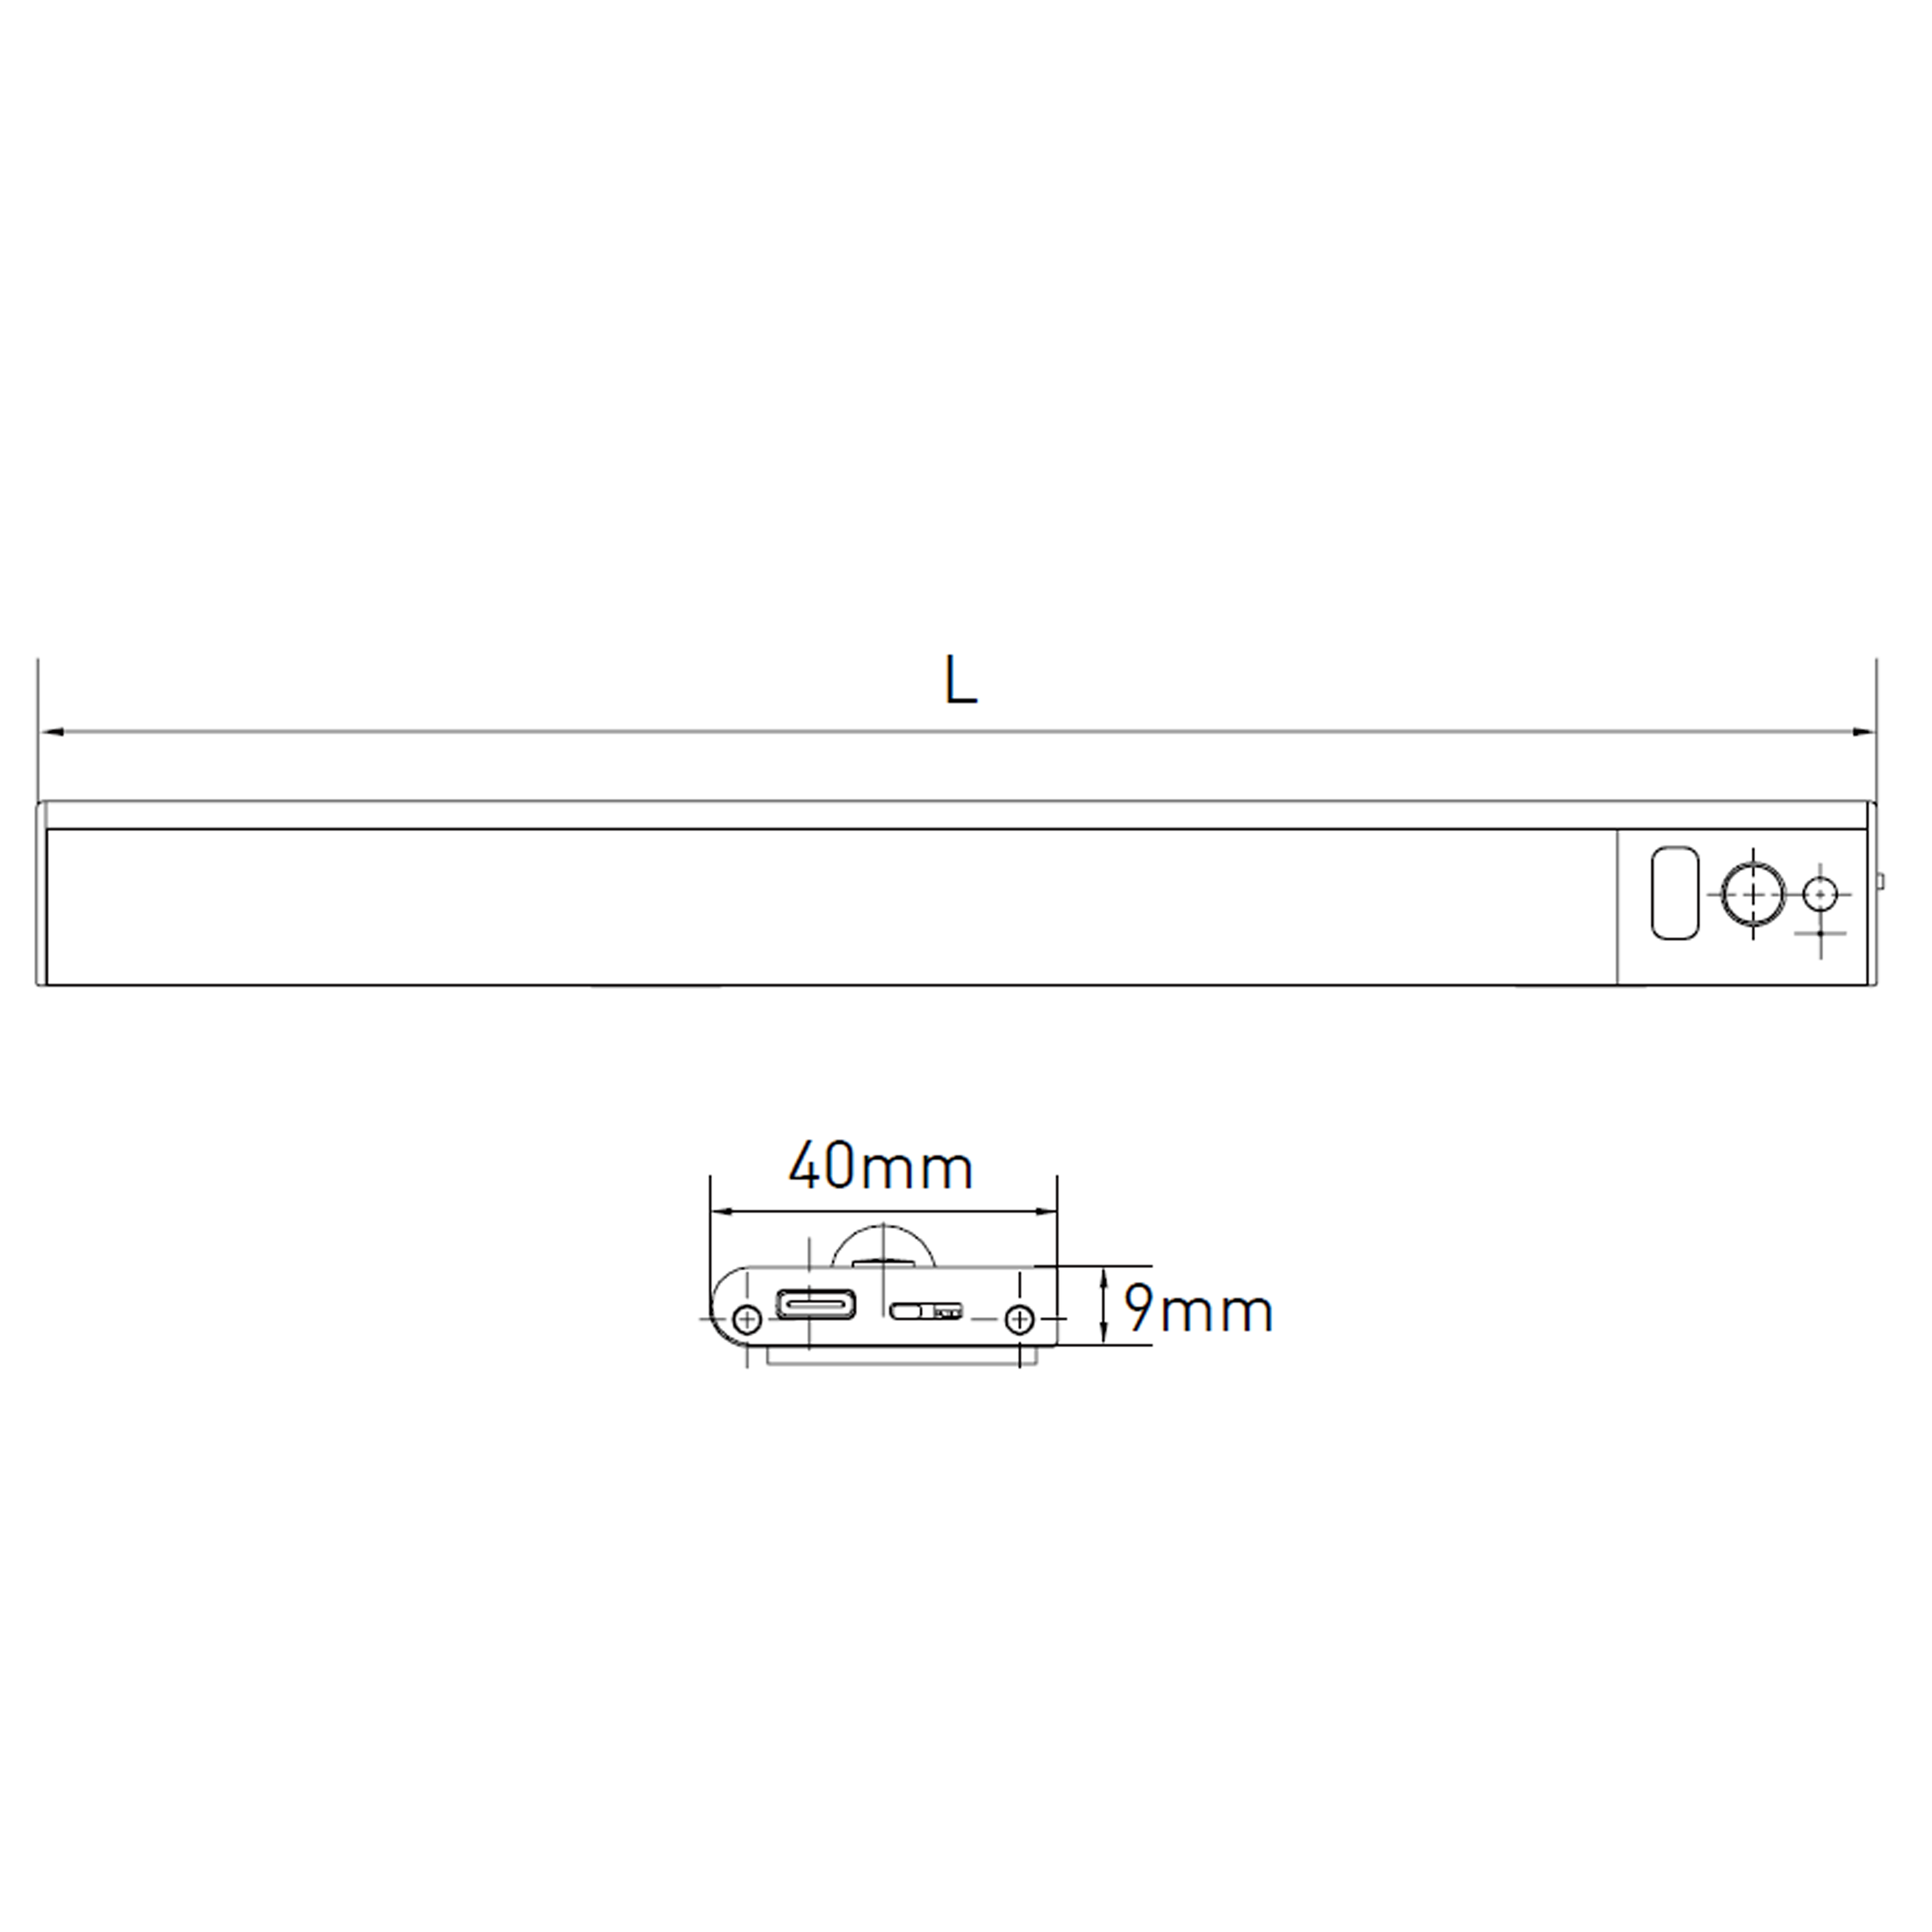 UB02 Series Wireless Side-Emitting Under Cabinet Bar Light_dimension